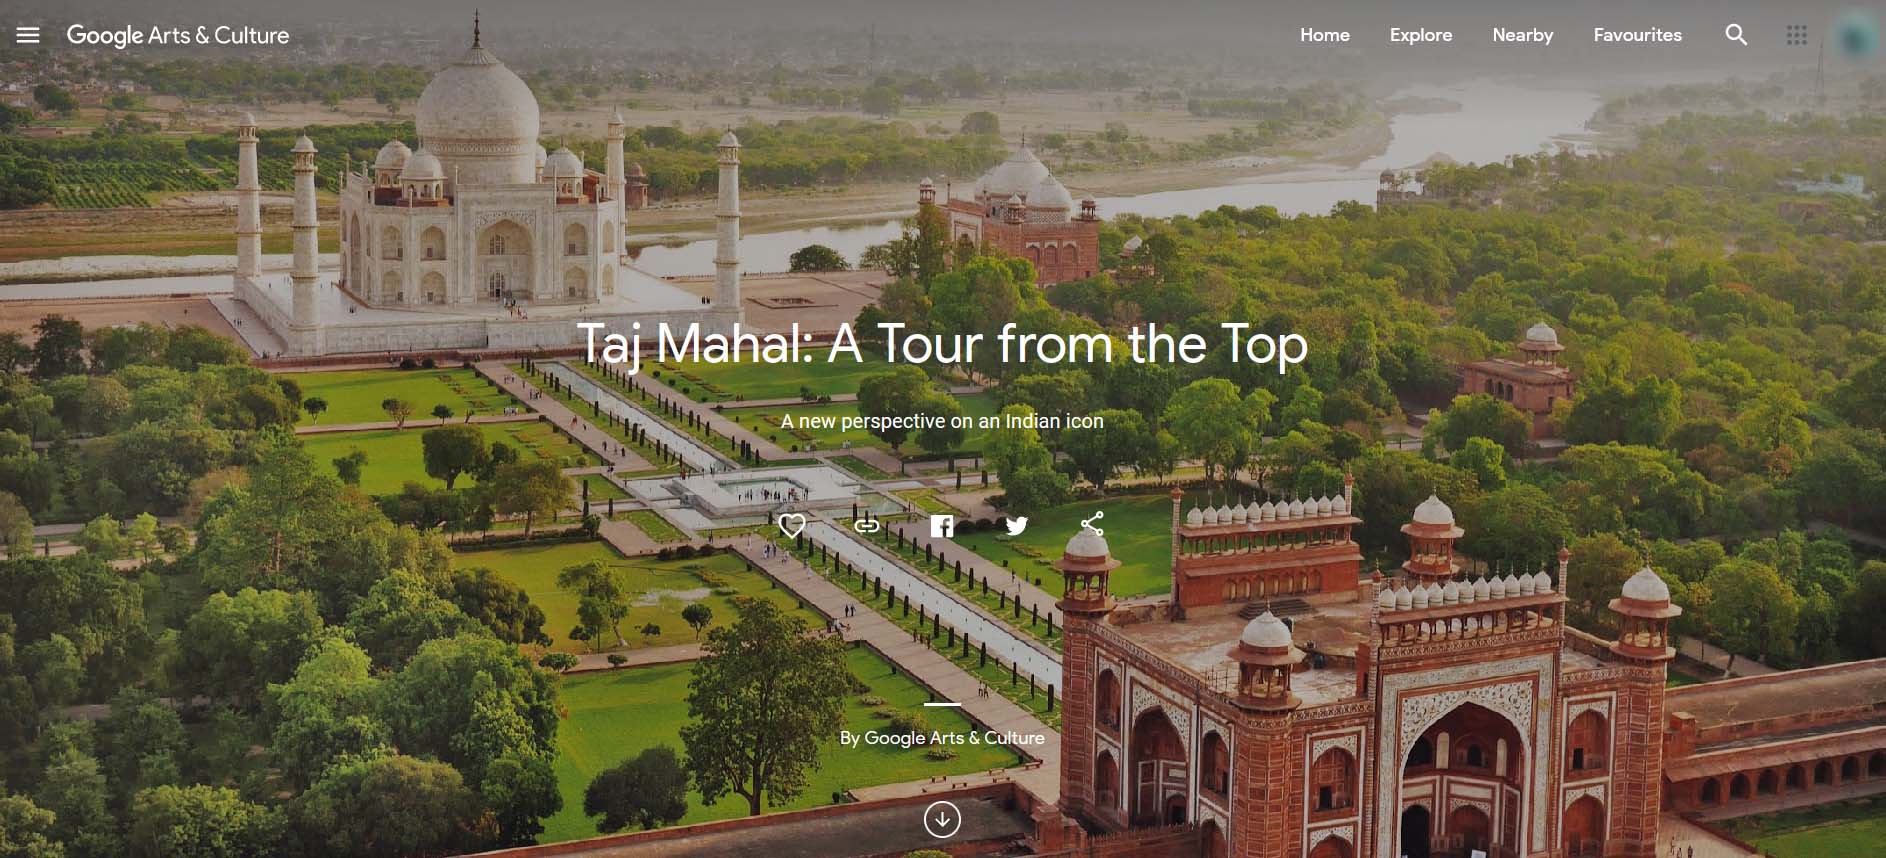 Google-Now-Gives-You-A-Virtual-Tour-Of-The-Taj-Mahal-ScreenShot